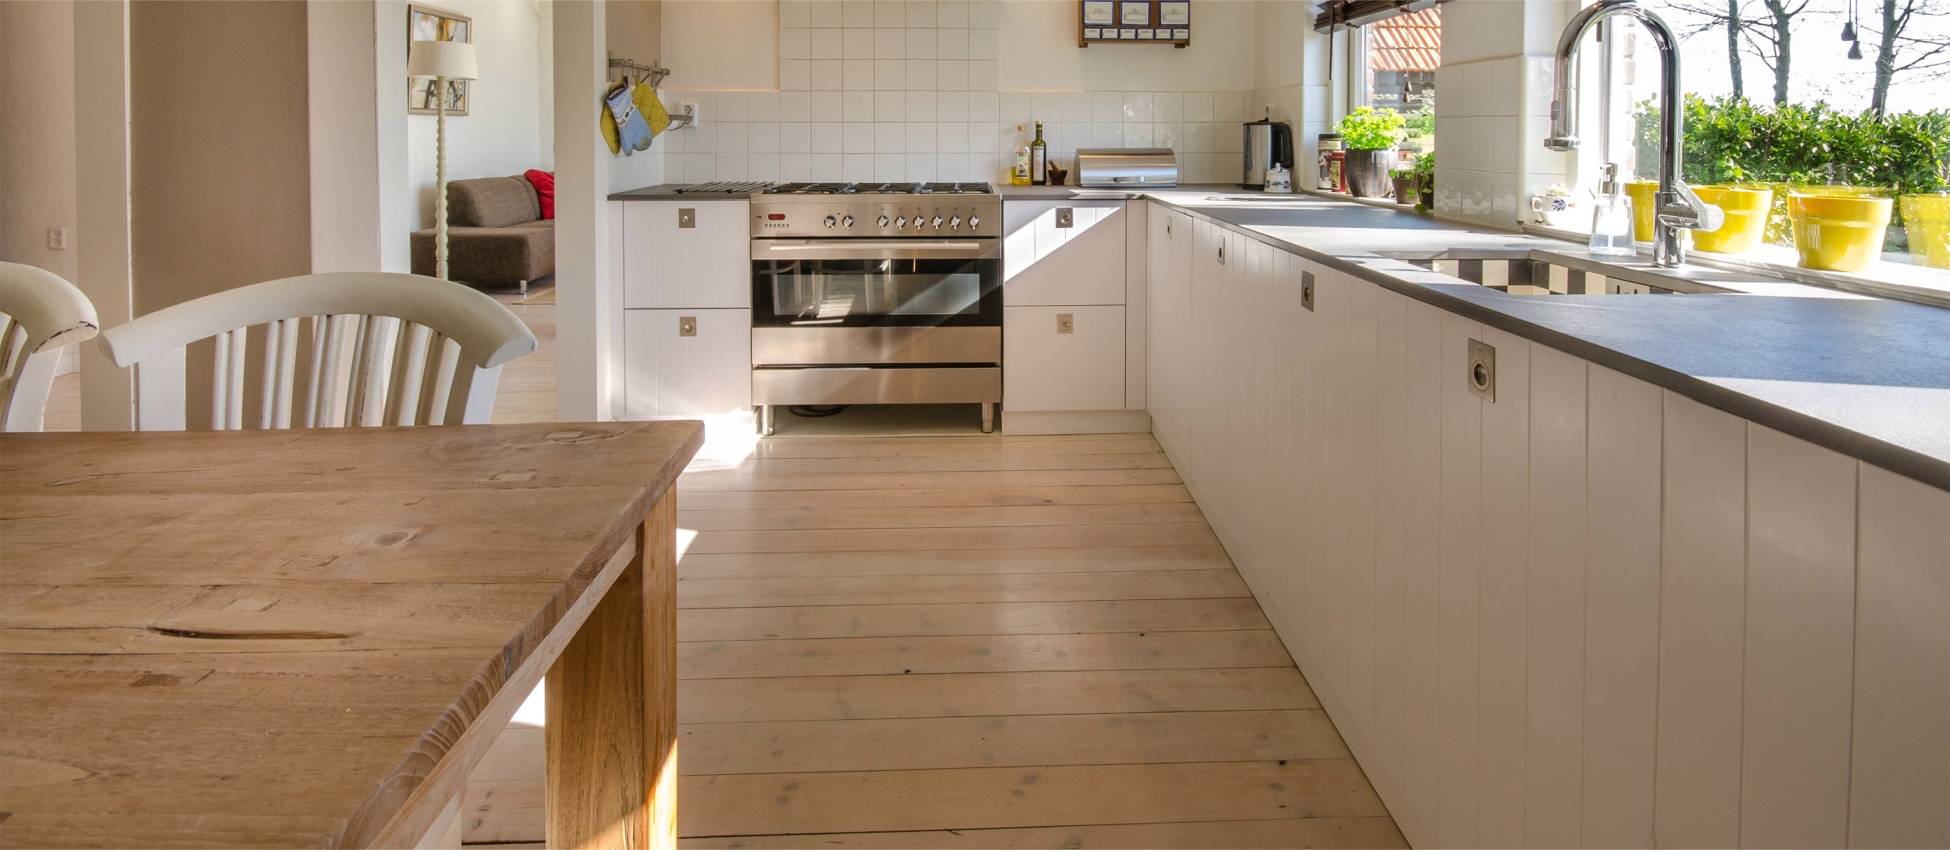 Solid wood flooring in kitchen. Floor installation services by Jonathan Doyle of AD Sanding & Varnishing, Kilkenny, Ireland